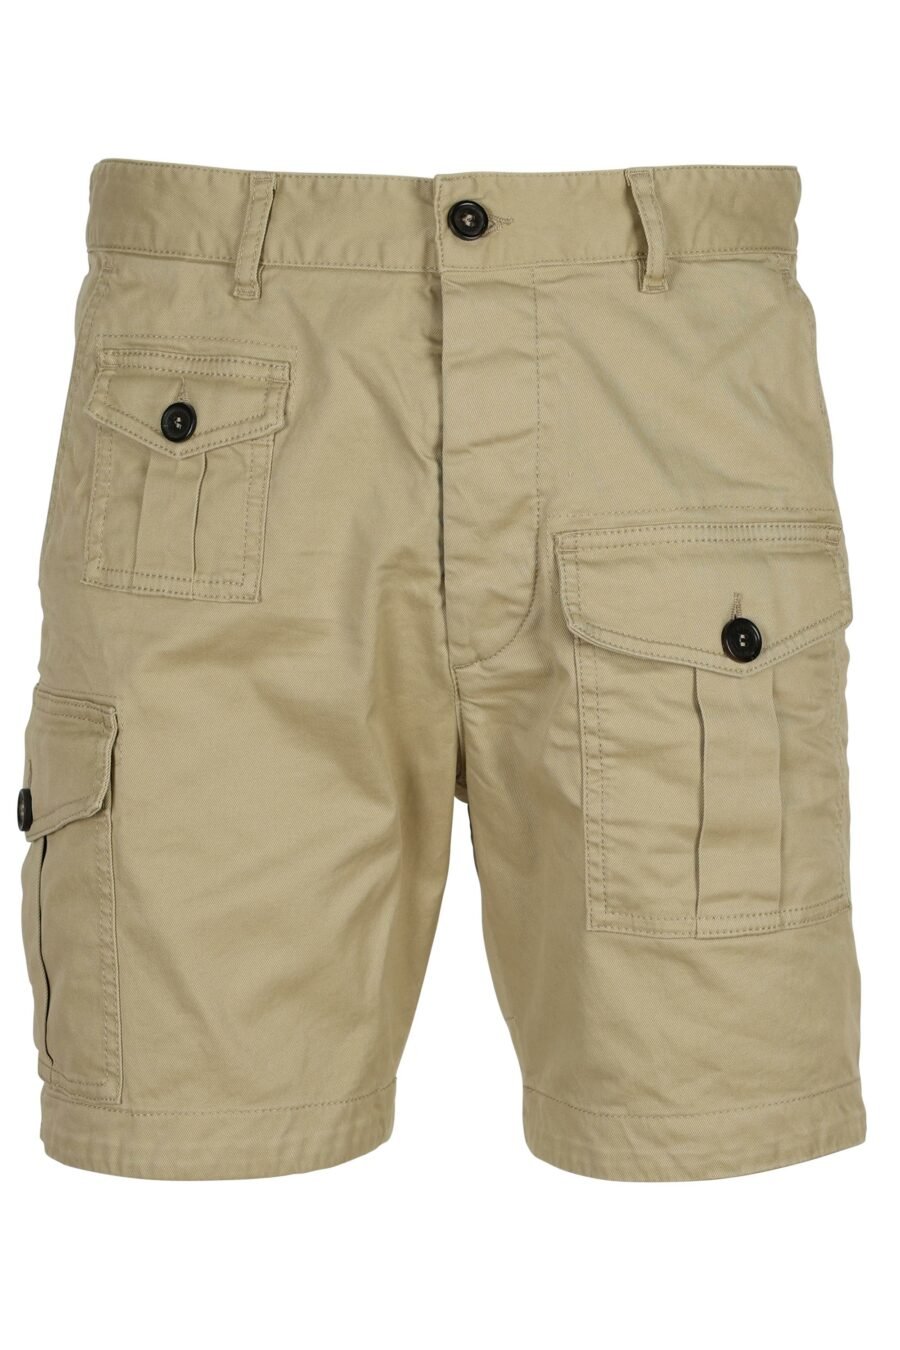 Beige shorts "sexy cargo shorts" - 8052134622605